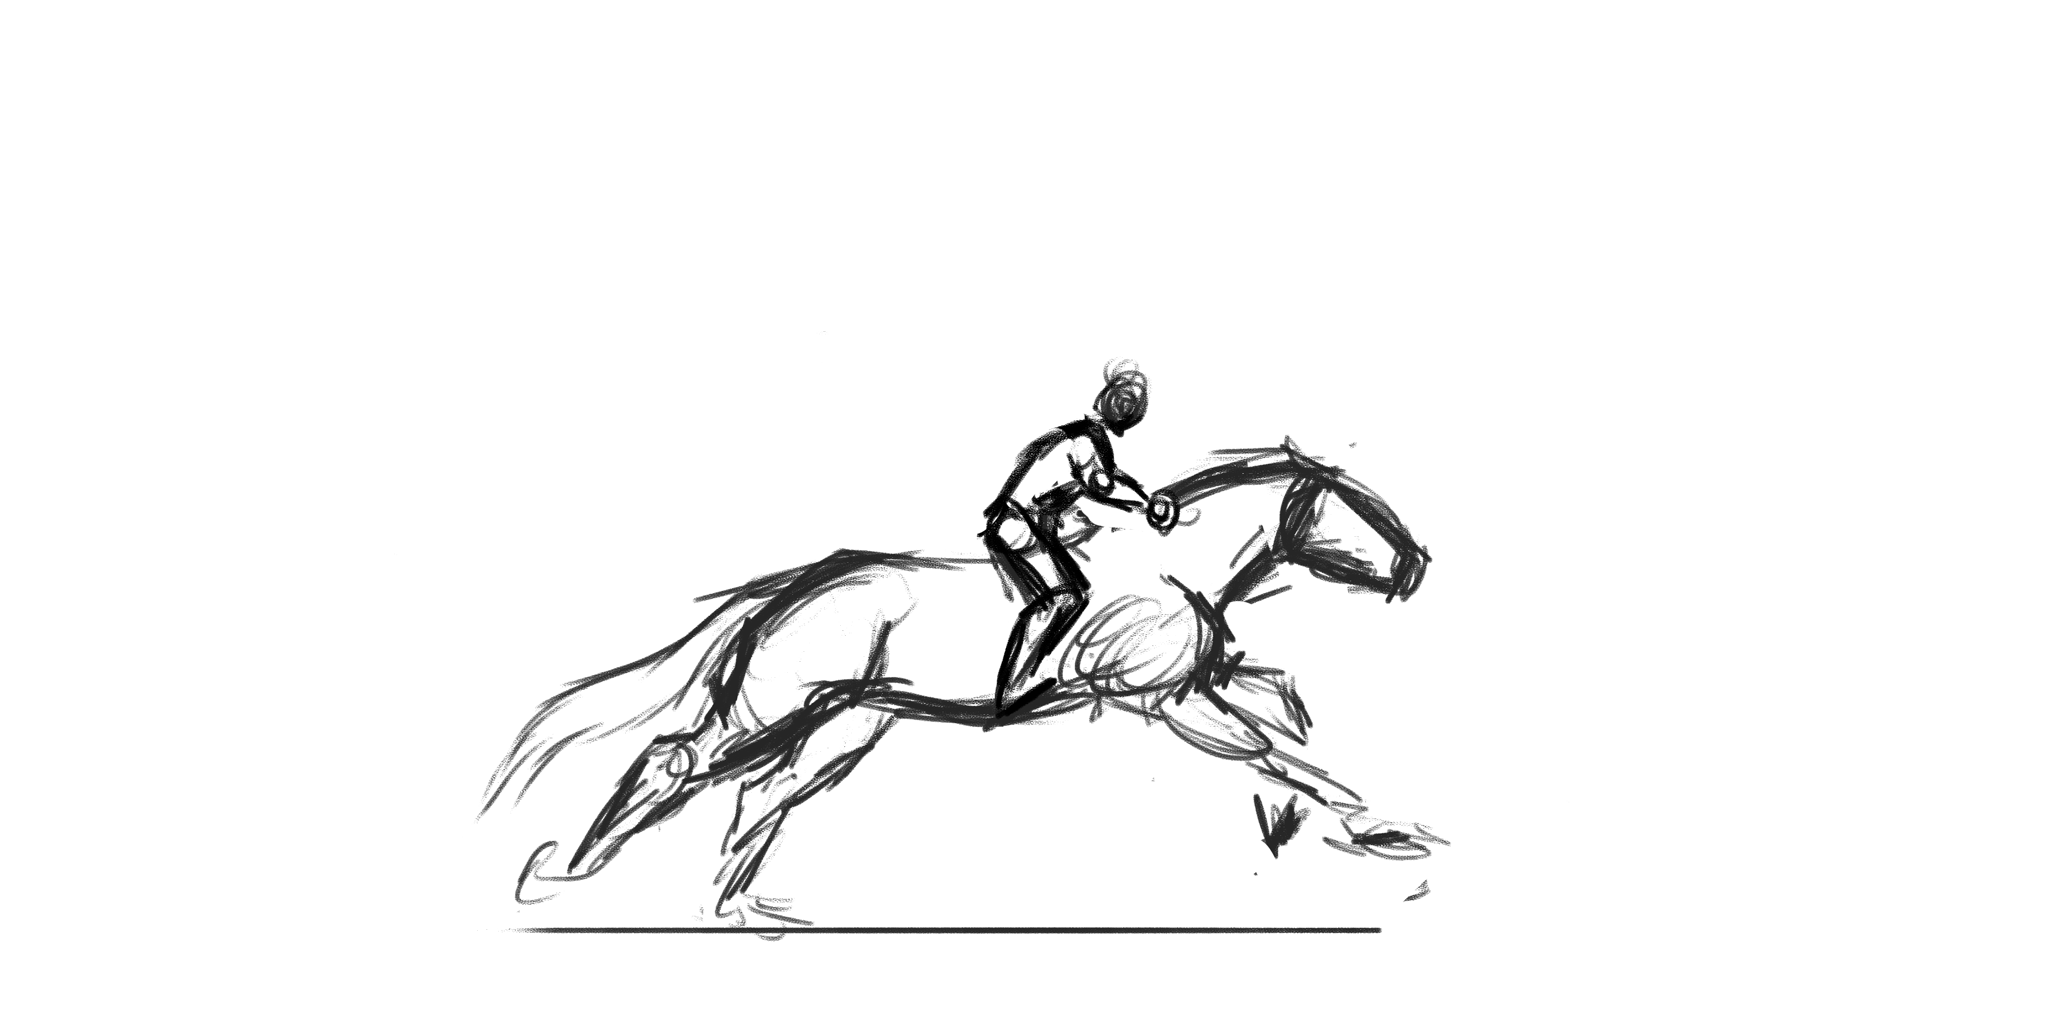 Horse Run